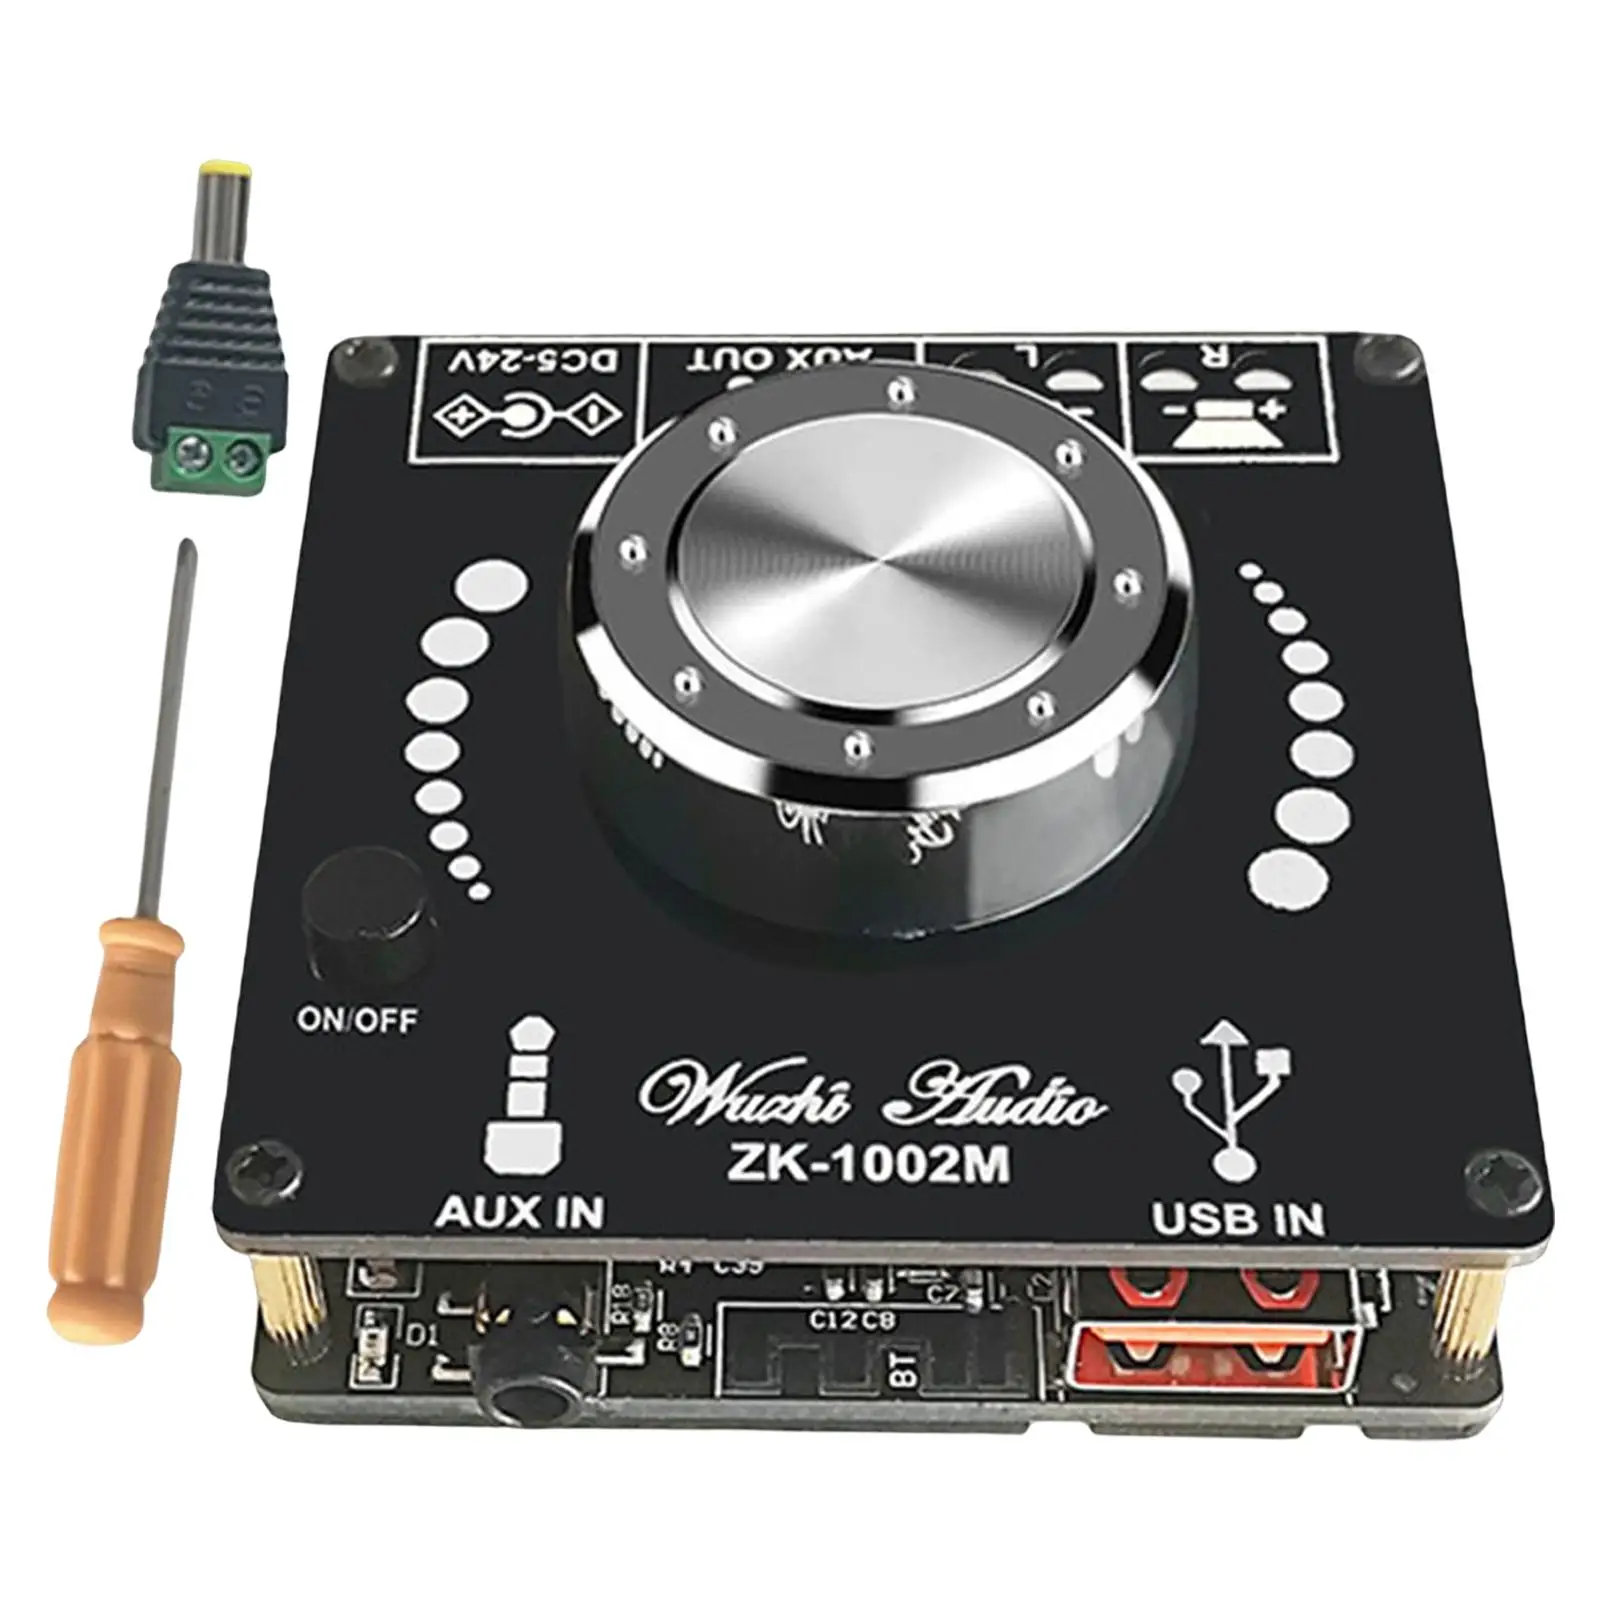 Zk-1002M Power Audio Amplifier Board 2x100W 2 Channel Amplificador Amp Mini Amplifier Board for Home Theater Speakers